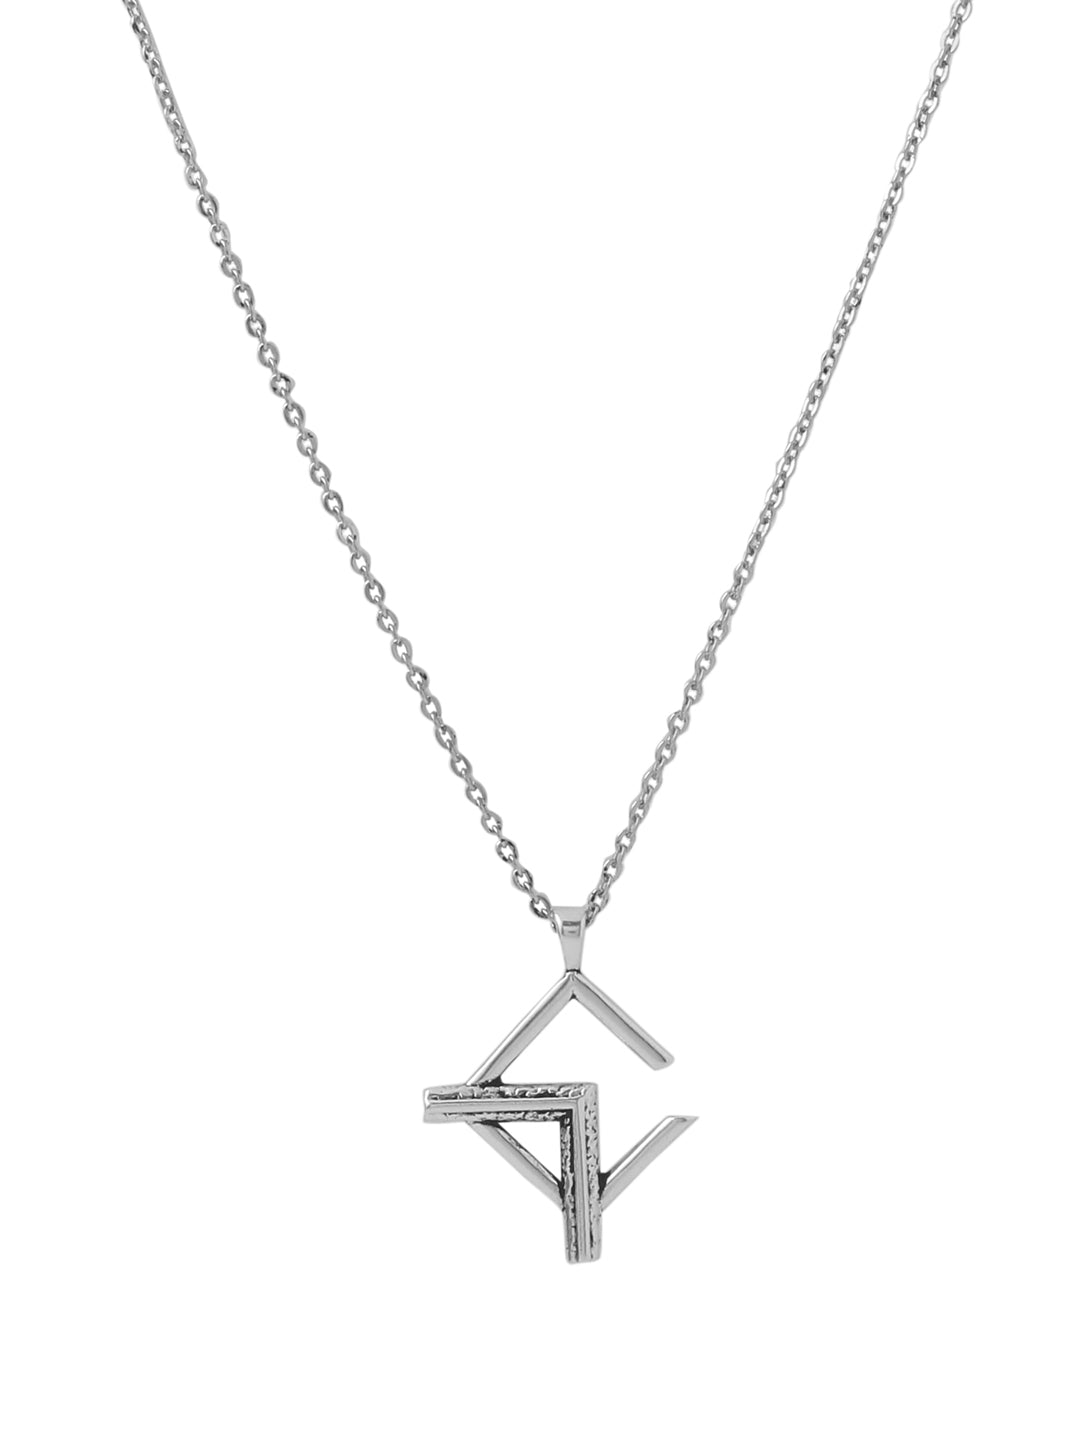 Veritas pendant with chain